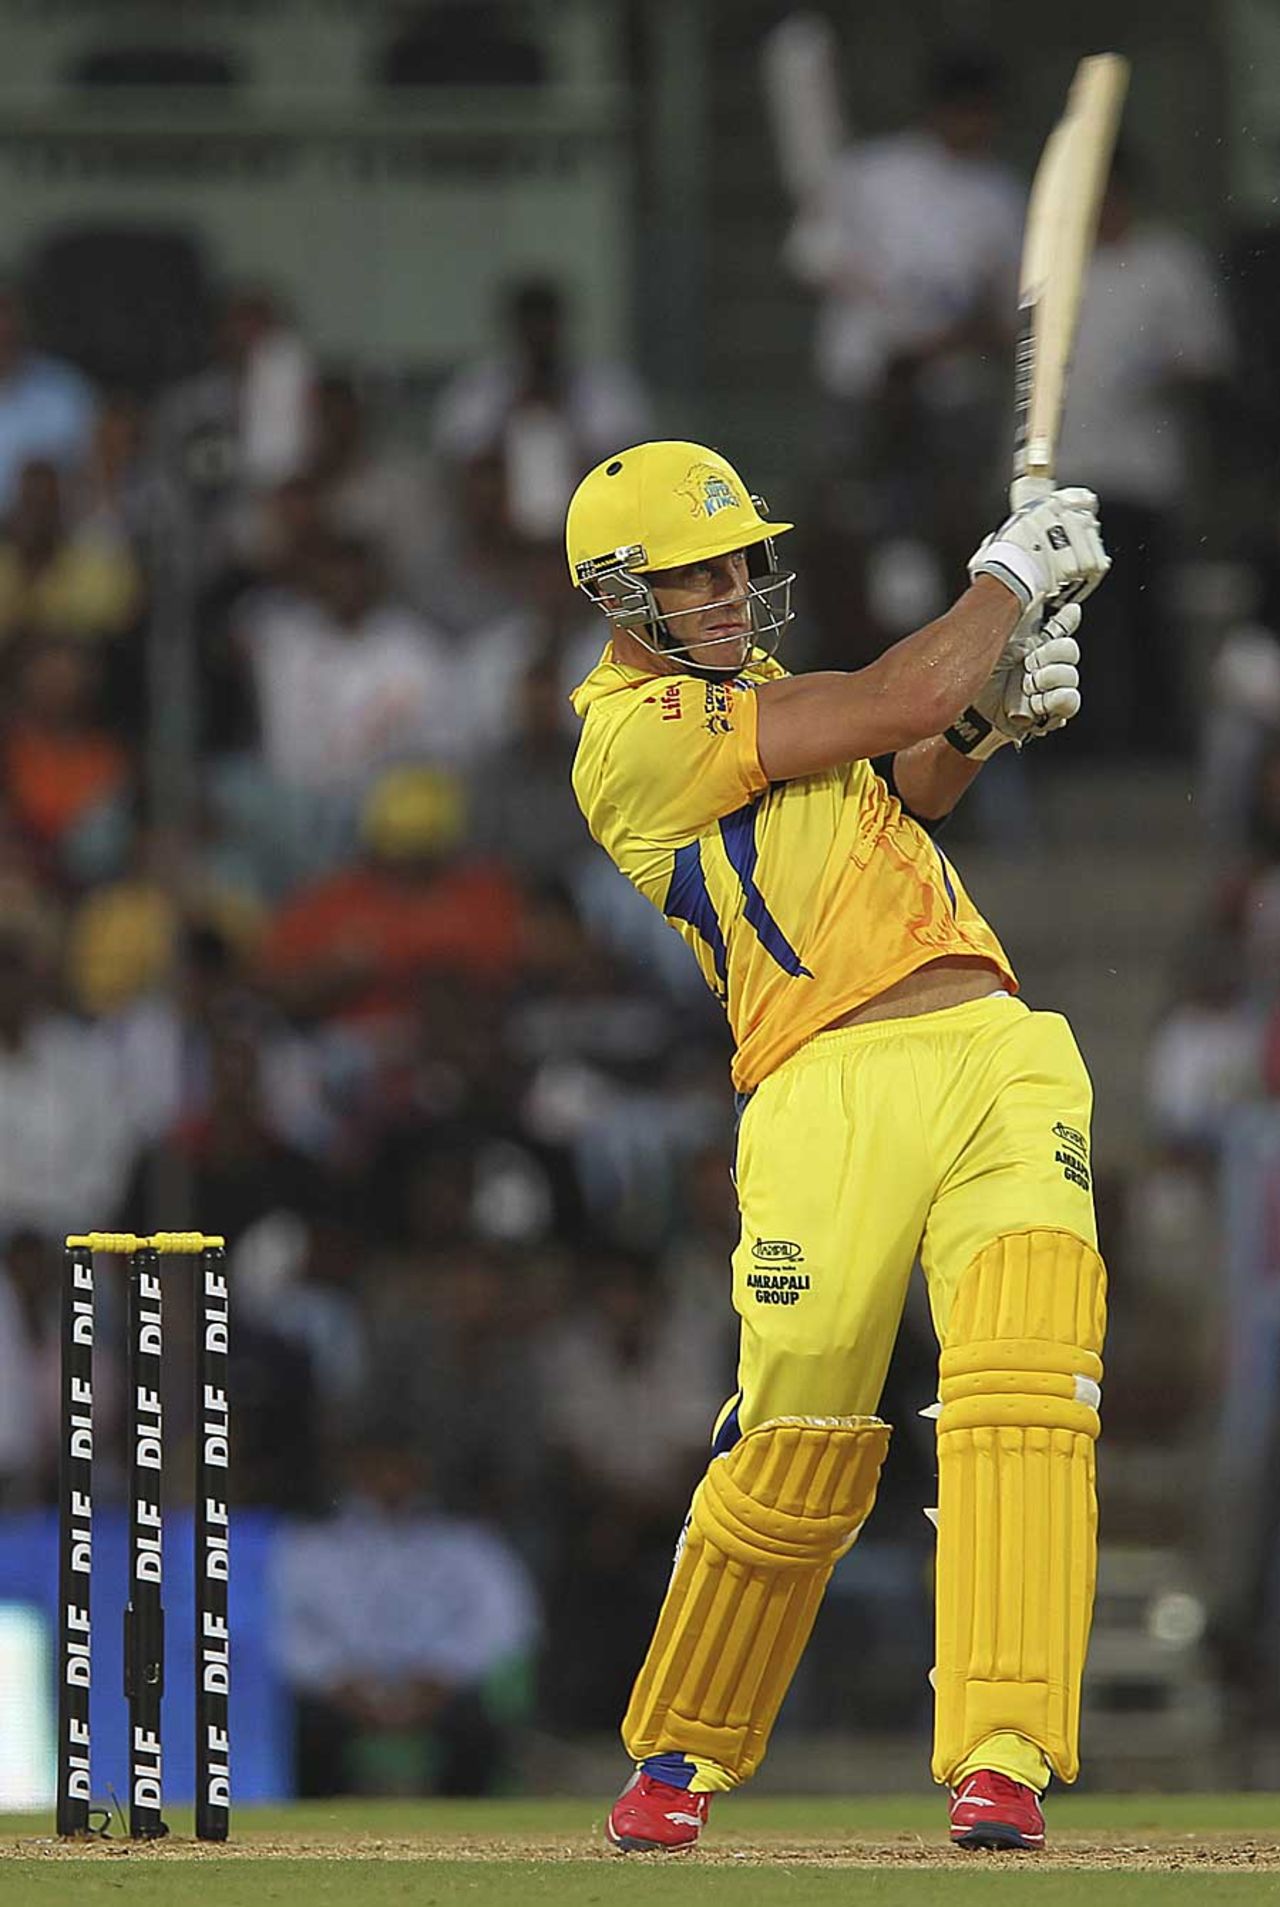 Faf du Plessis smashes one, Chennai Super Kings v Royal Challengers Bangalore, IPL, Chennai, April 12, 2012